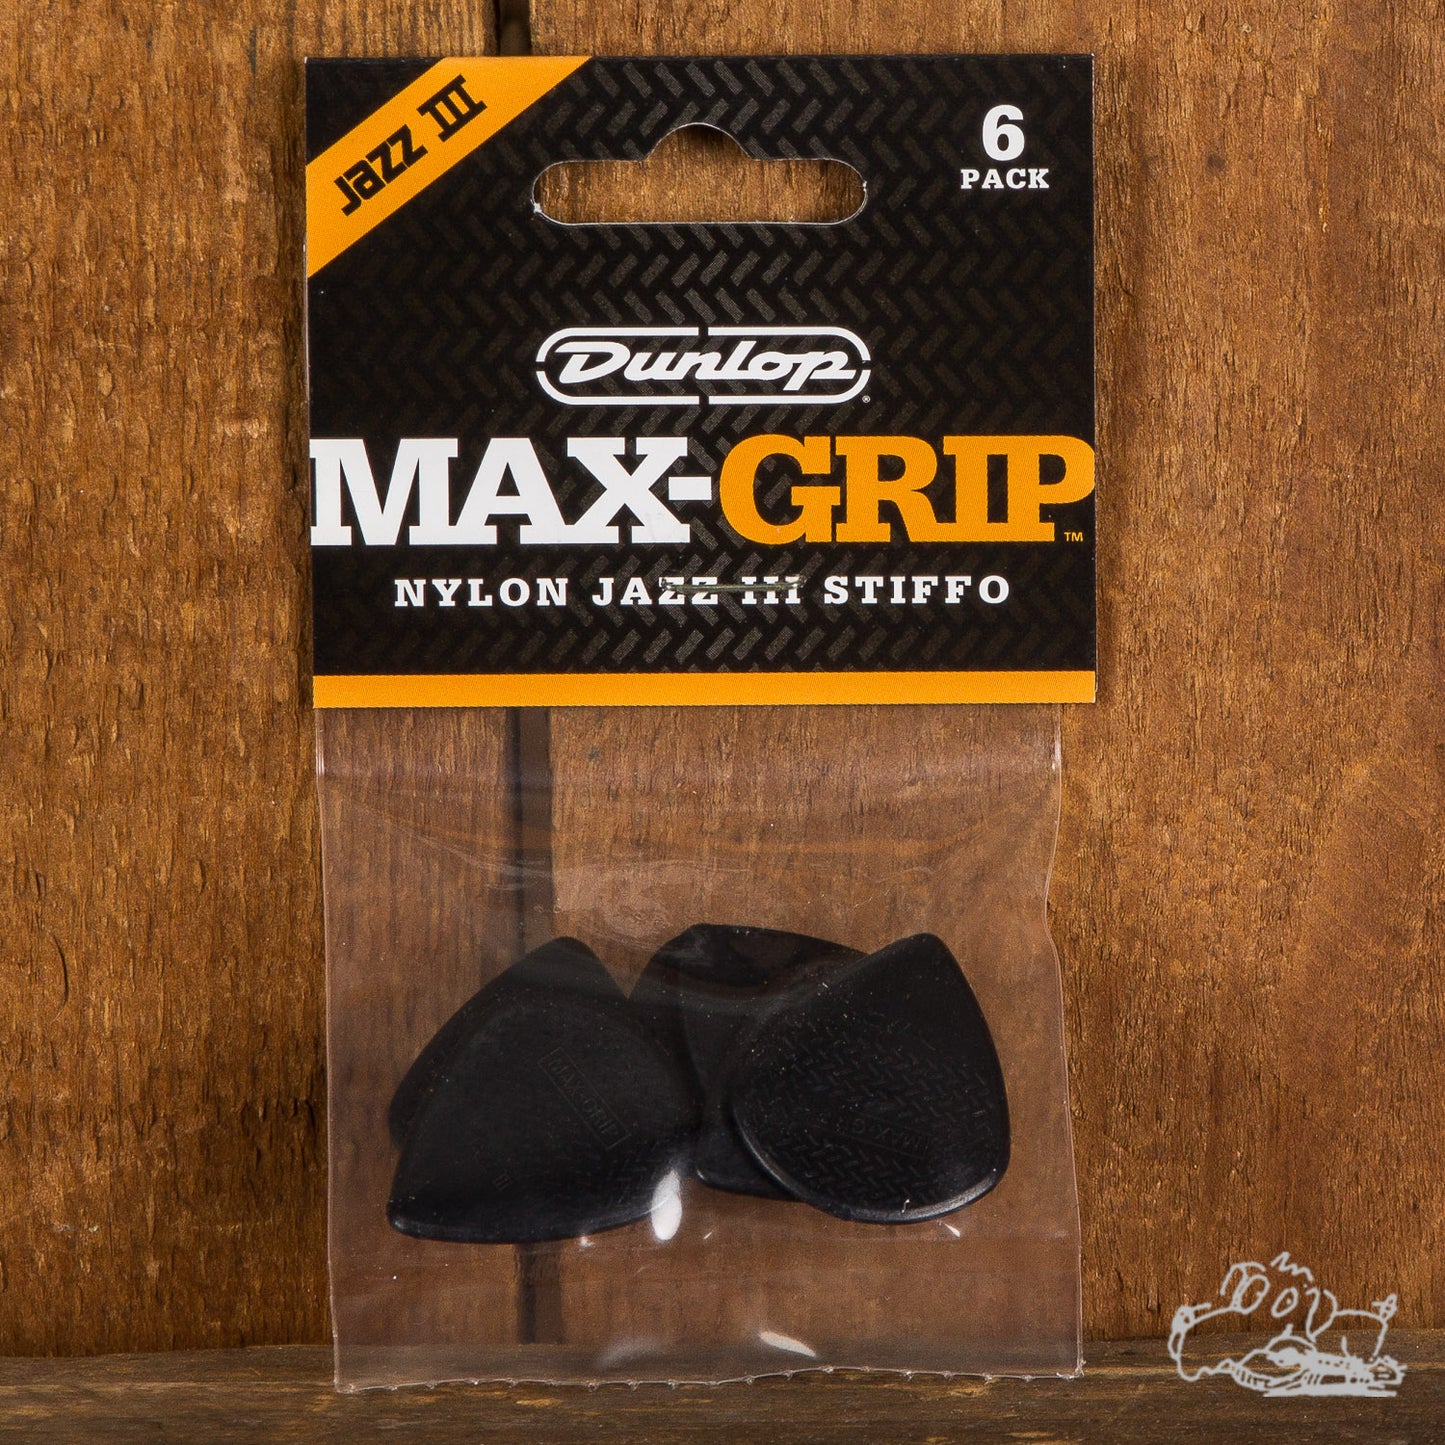 Dunlop Max-Grip Nylon Jazz III Stiffo Picks 6-Pack